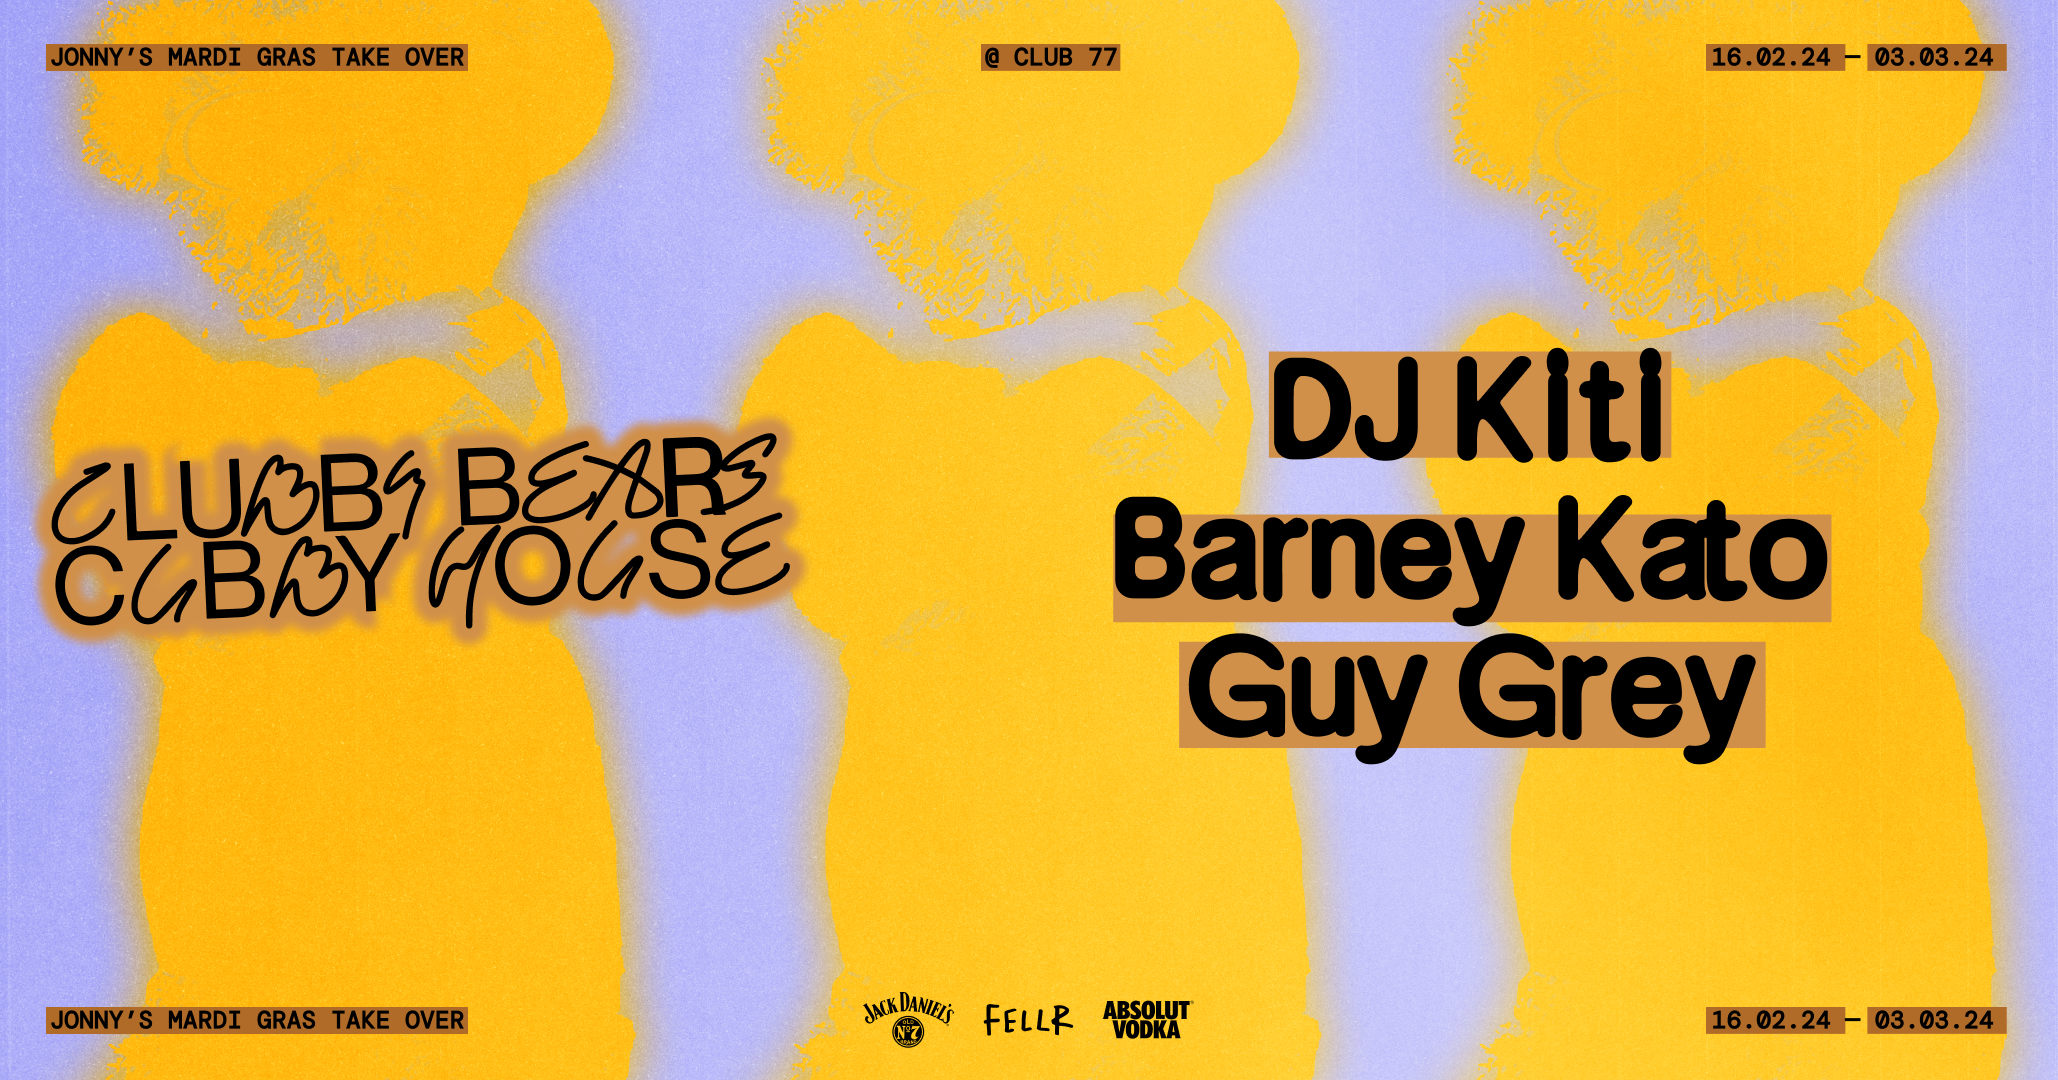 Clubby Bears Cubby House with DJ Kiti, Barney Kato, Guy Grey - Página frontal